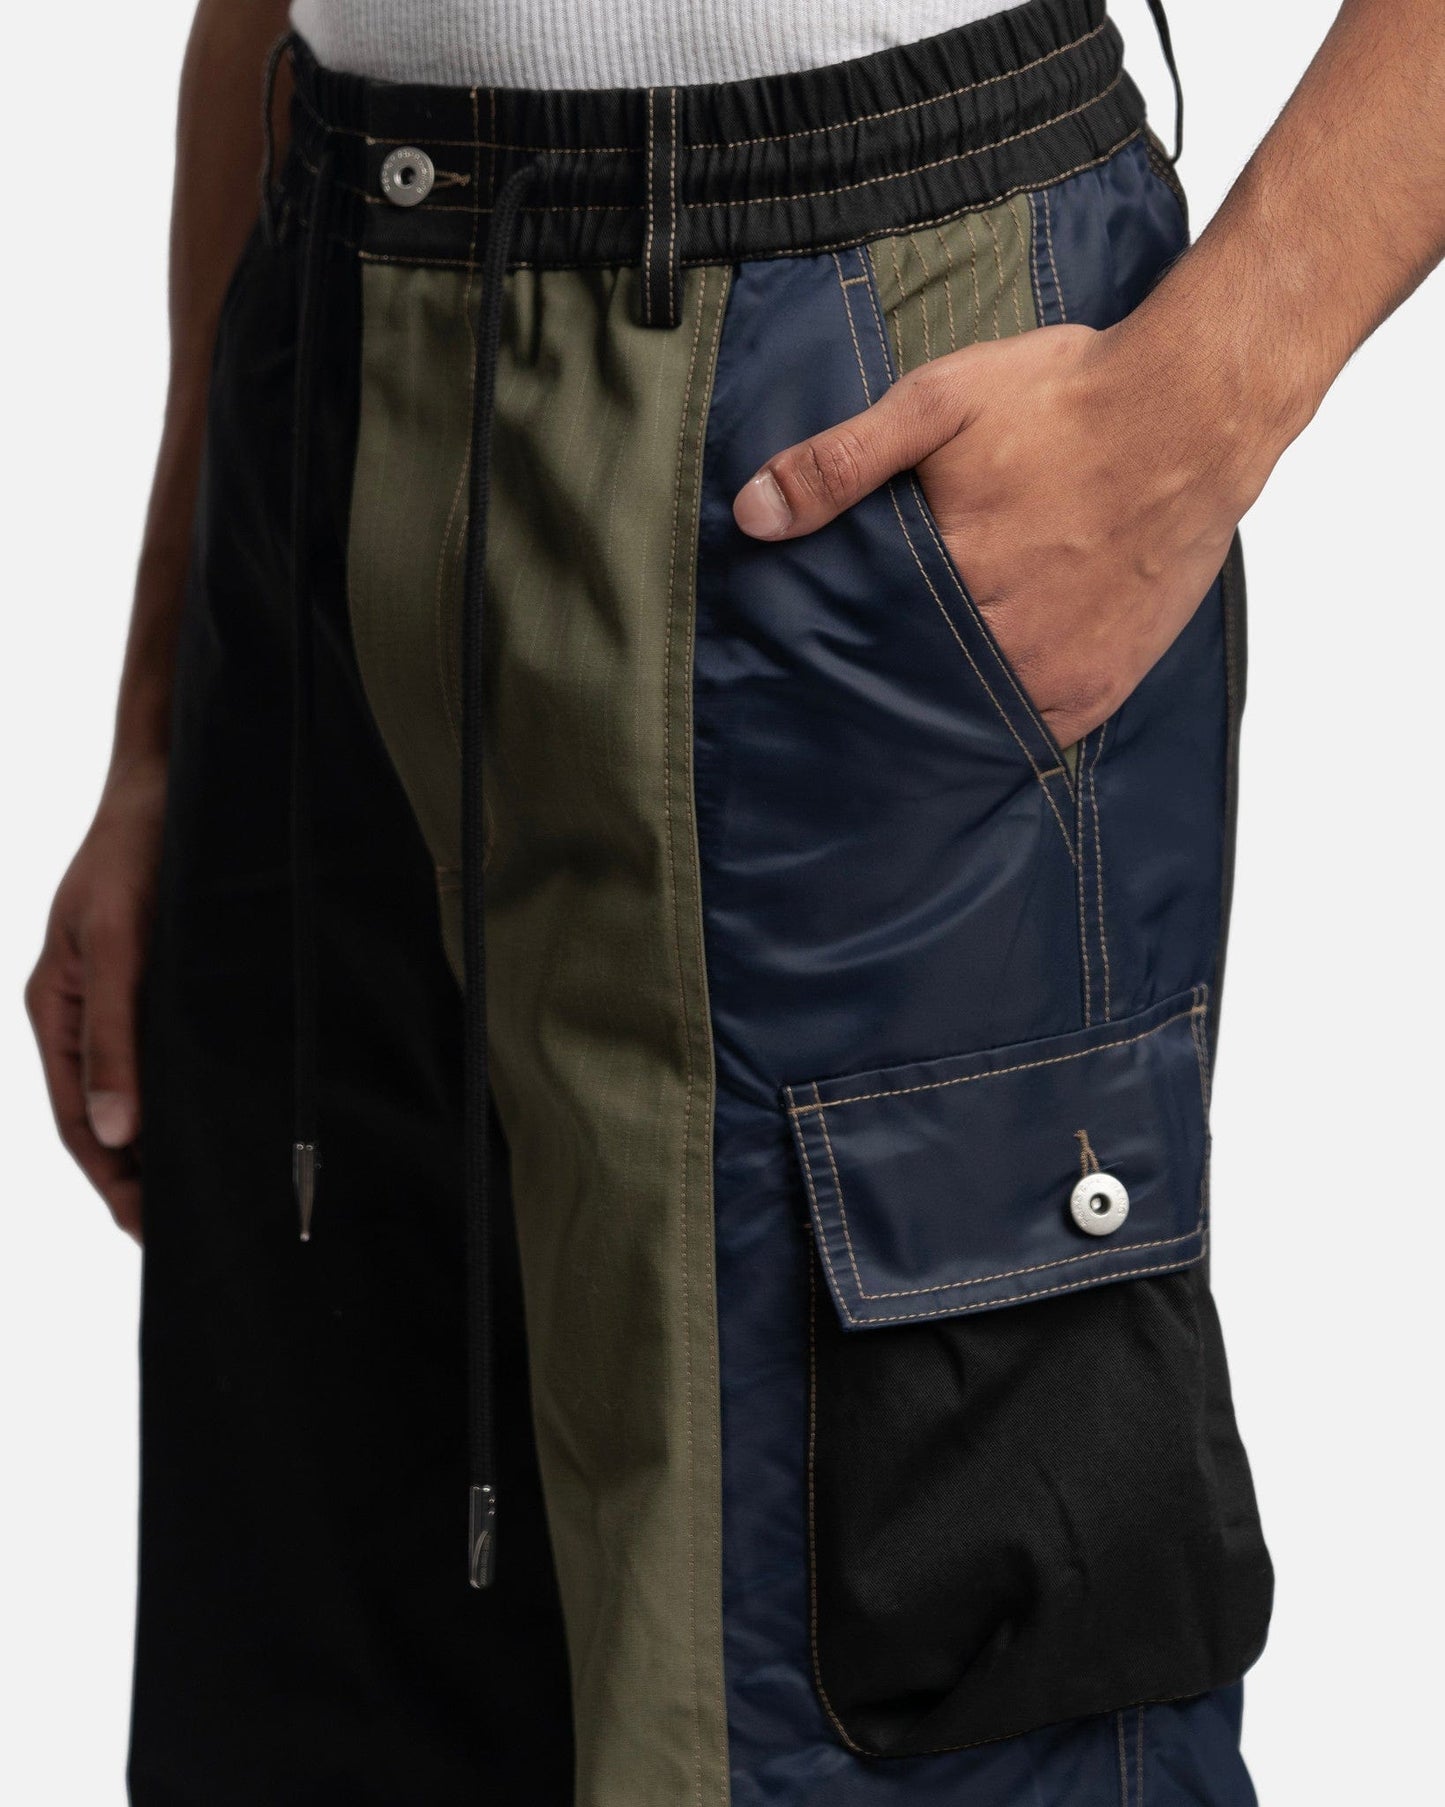 Feng Chen Wang Men's Pants Contrast Color Sweatpants in Black